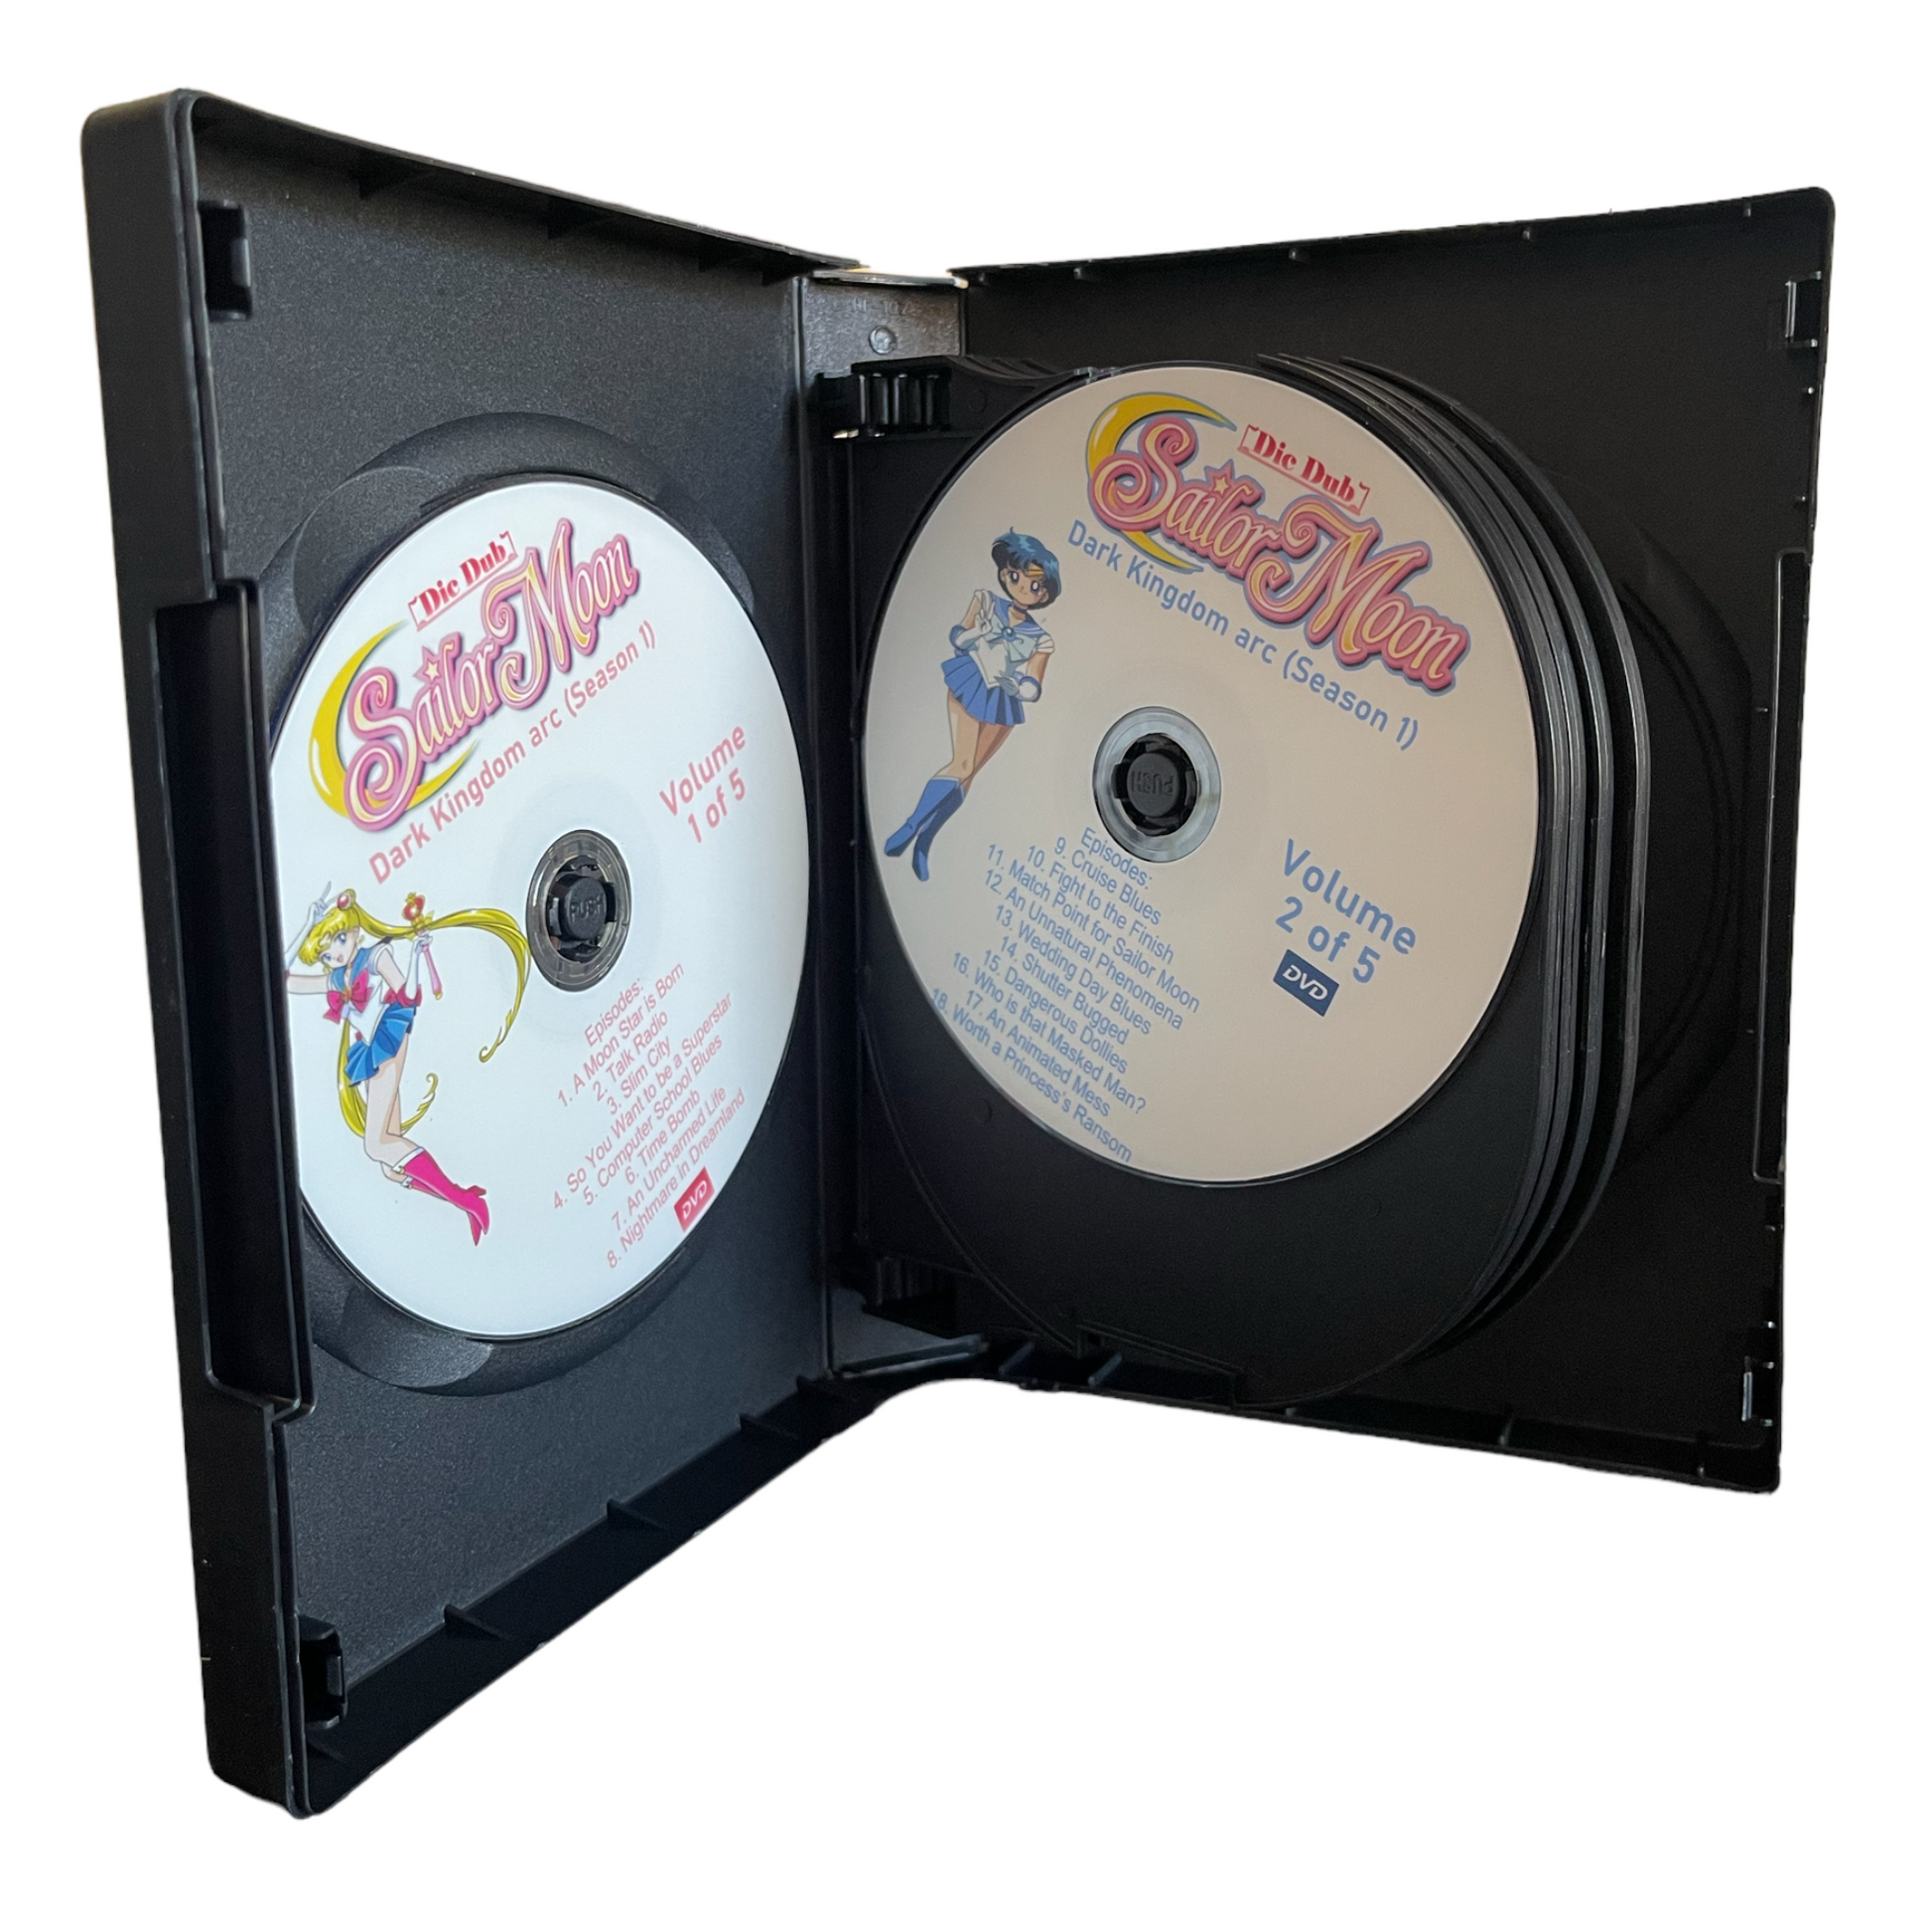 The Owl House:seasons1-3 DVD 5-Disc region 1 Brand New Free shipping